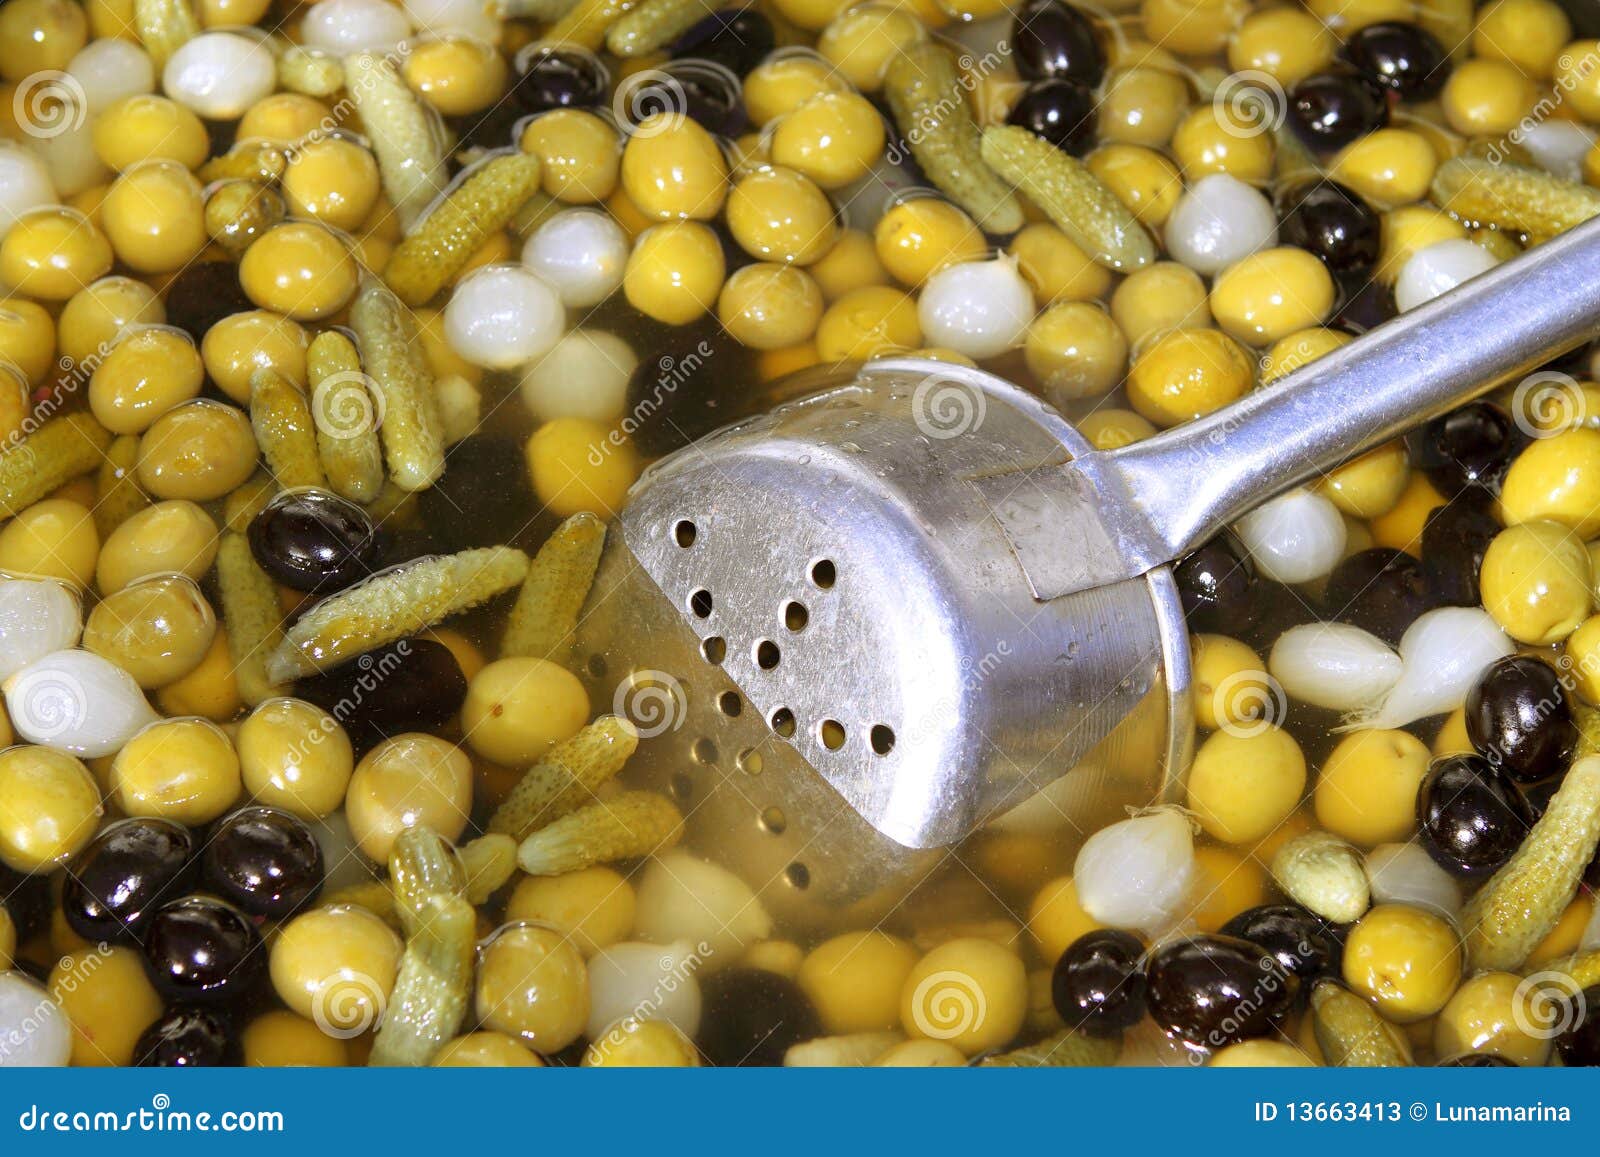 olives varied colorful texture on market